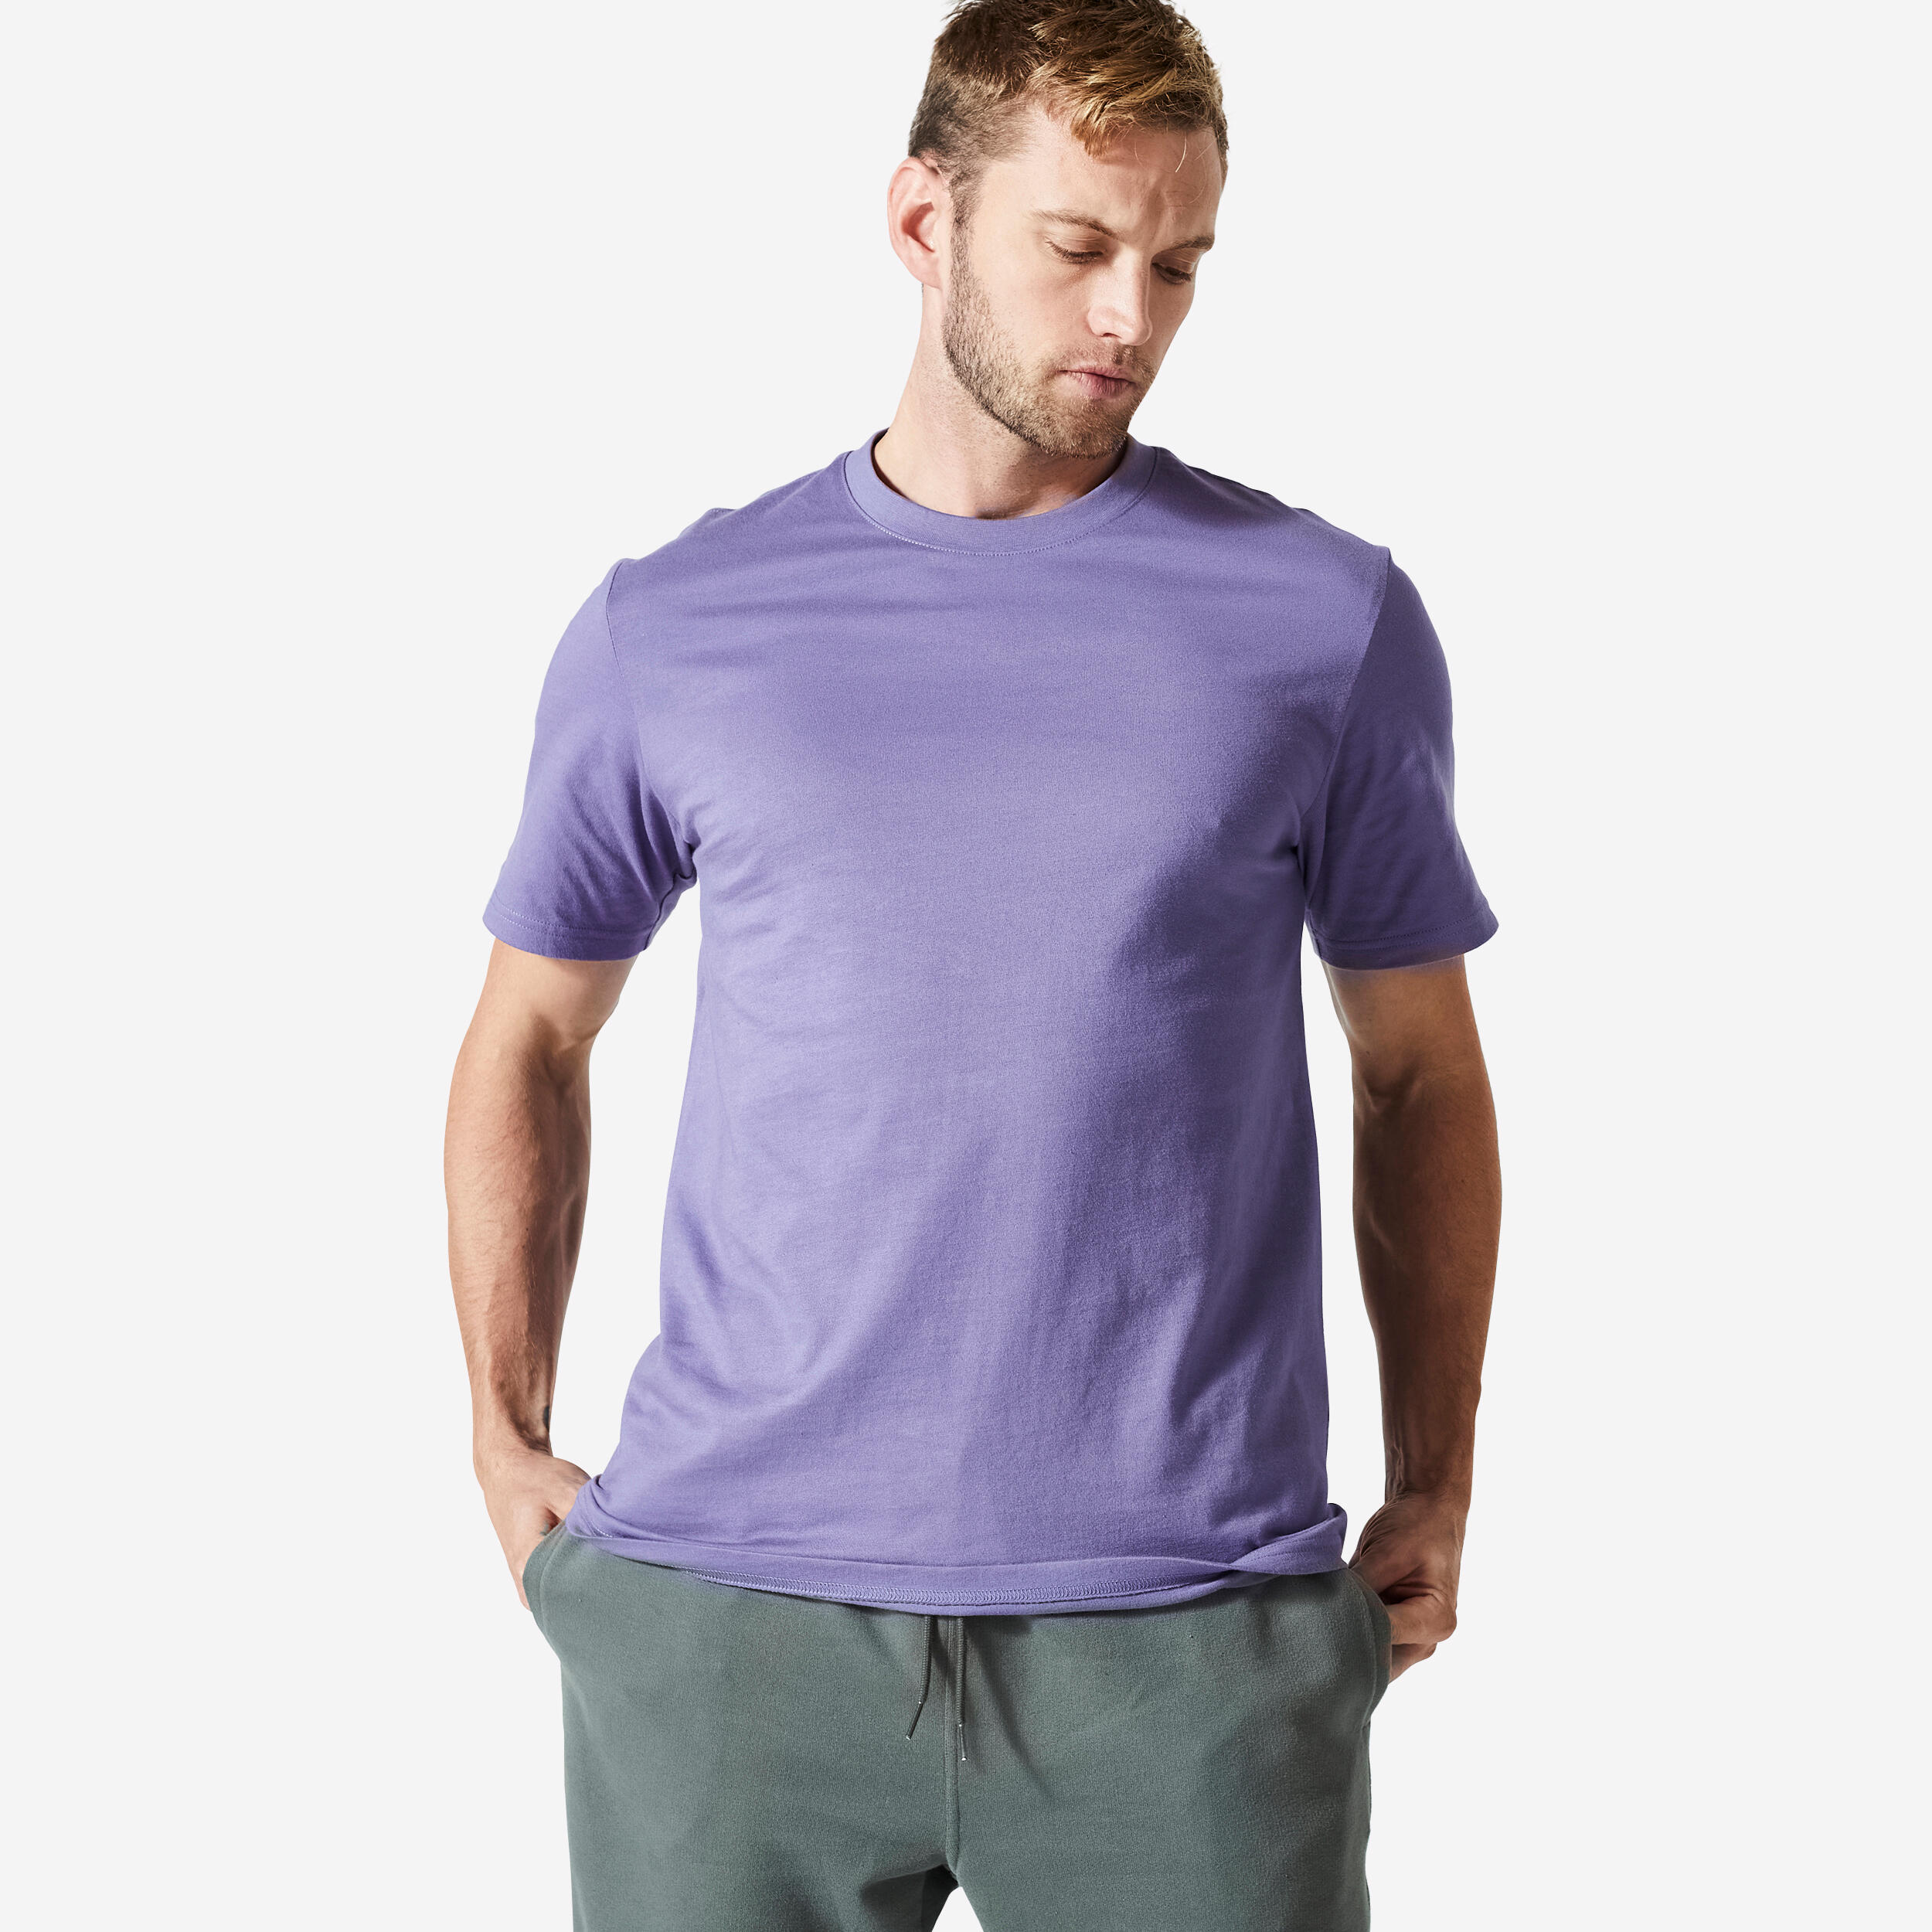 Men's Fitness T-Shirt 500 Essentials - Blue 1/5